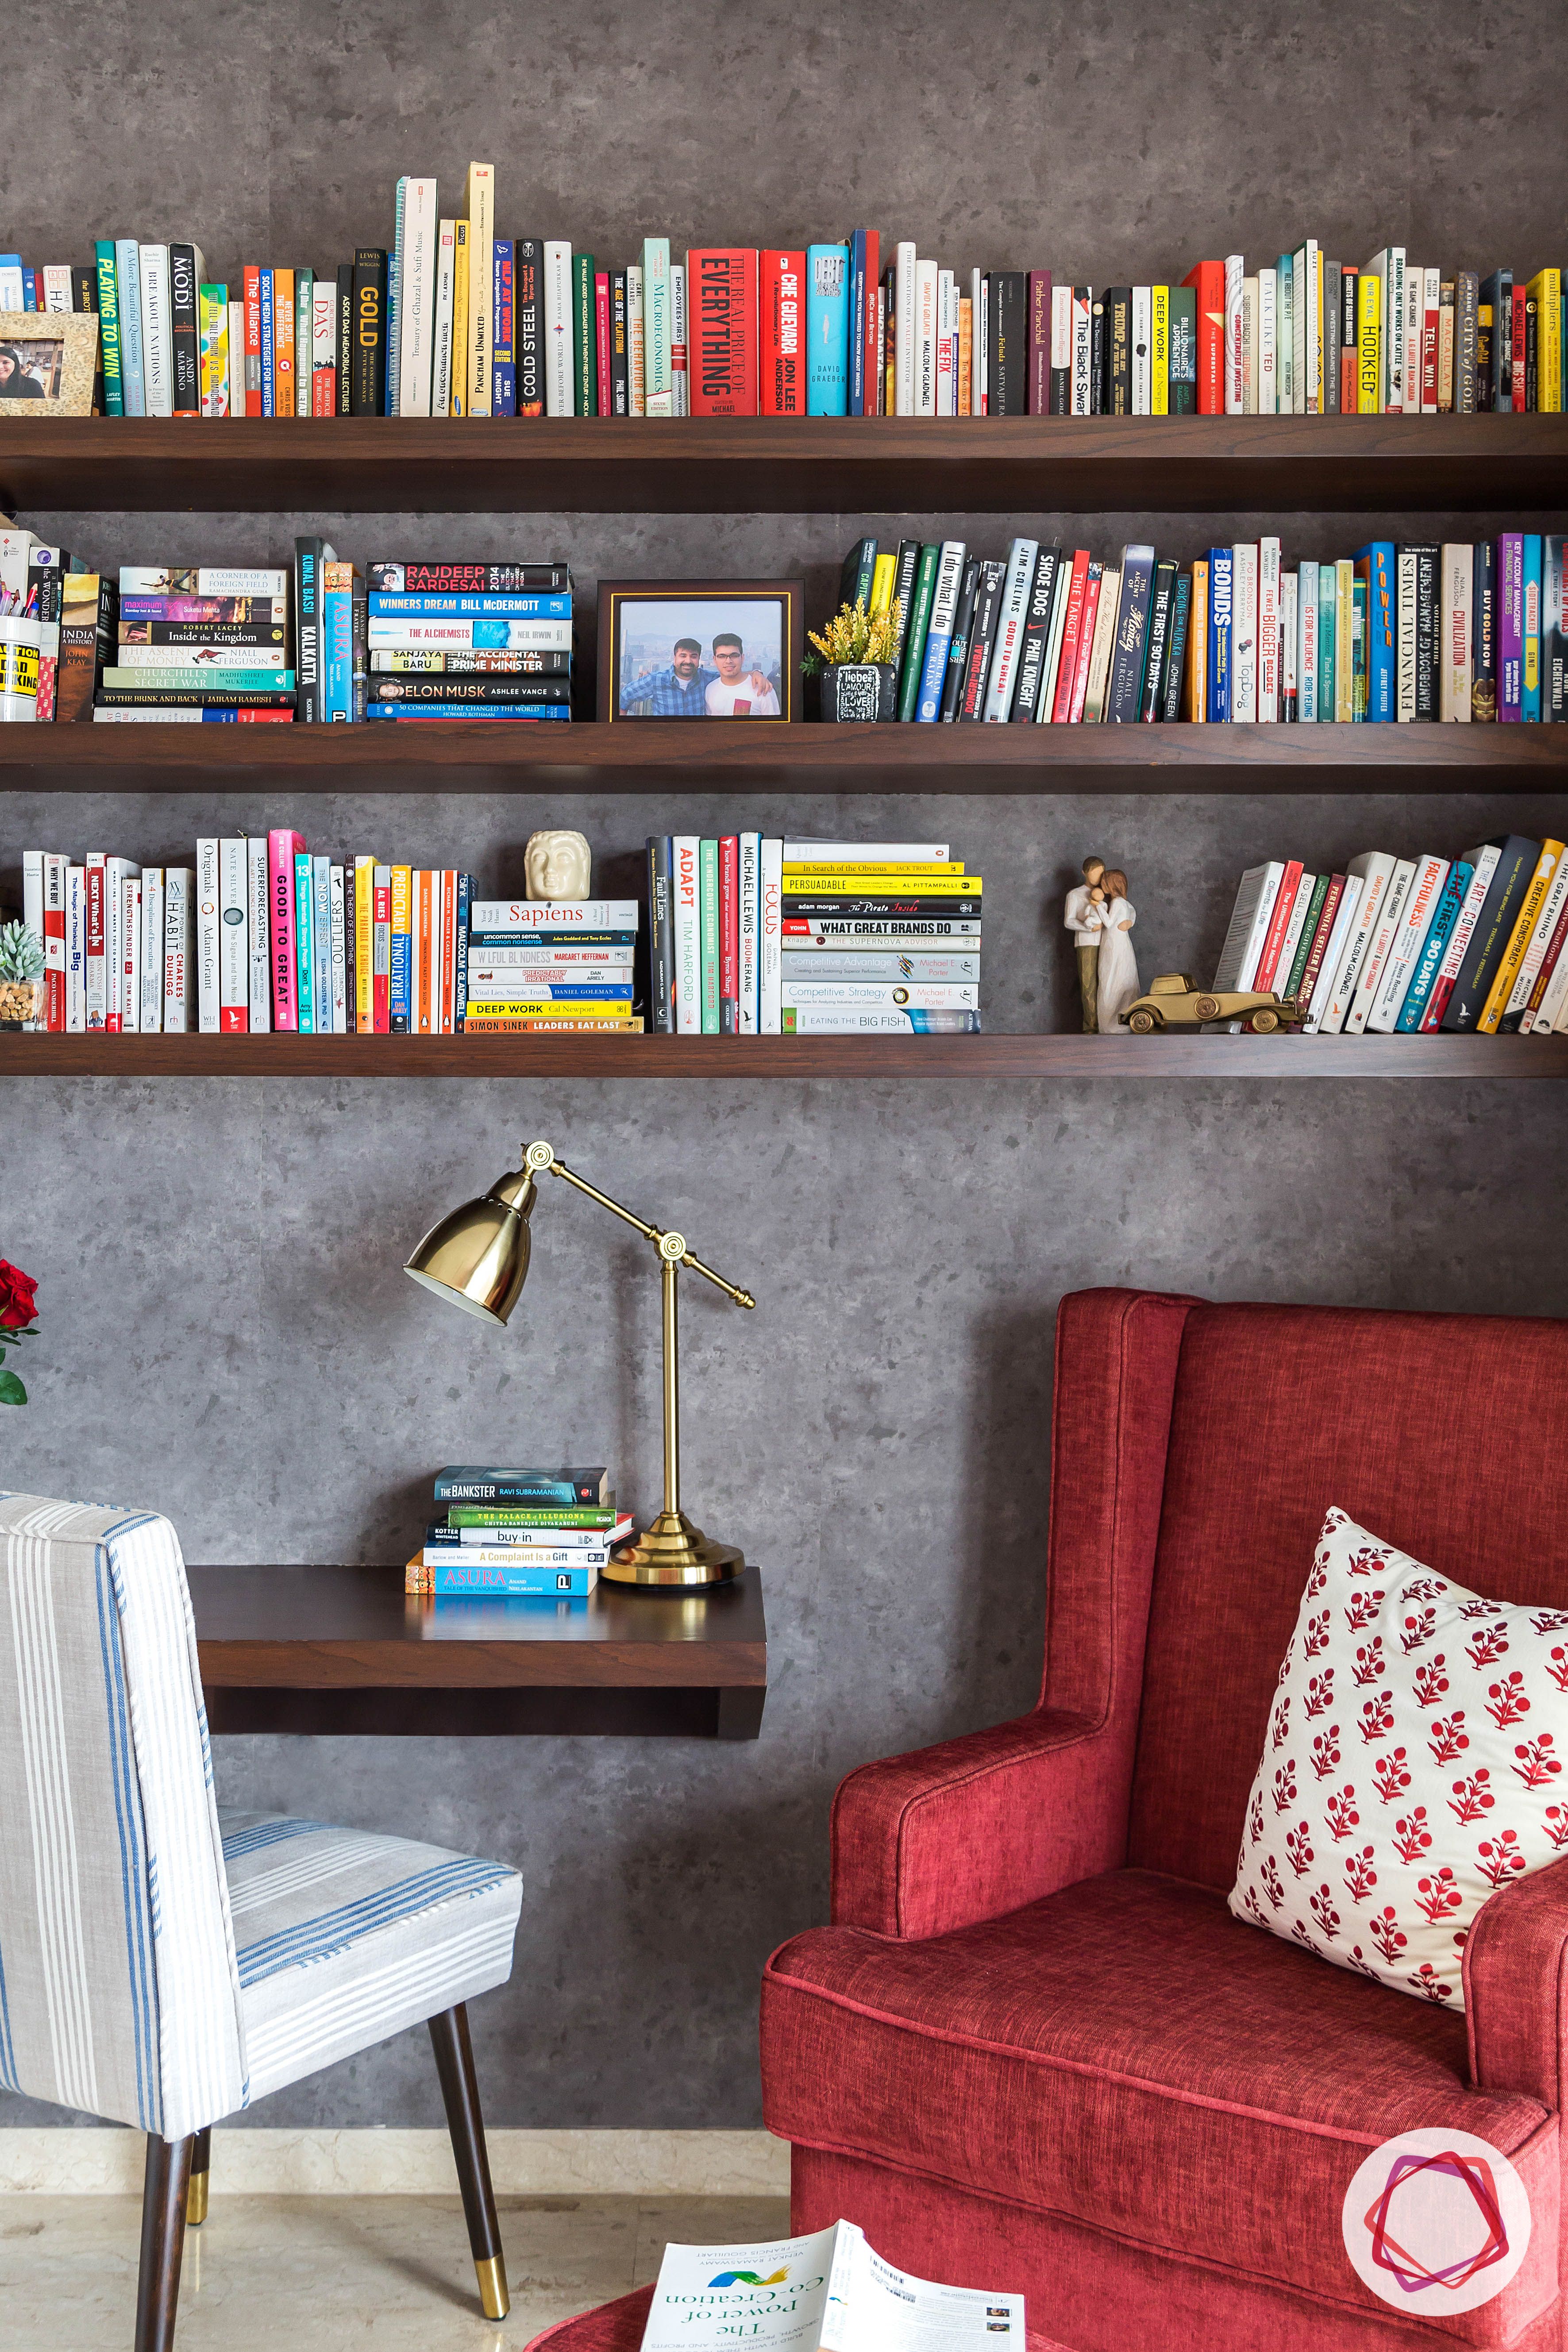 lodha group-reading corner design-book shelf designs-reading chair for bedroom
